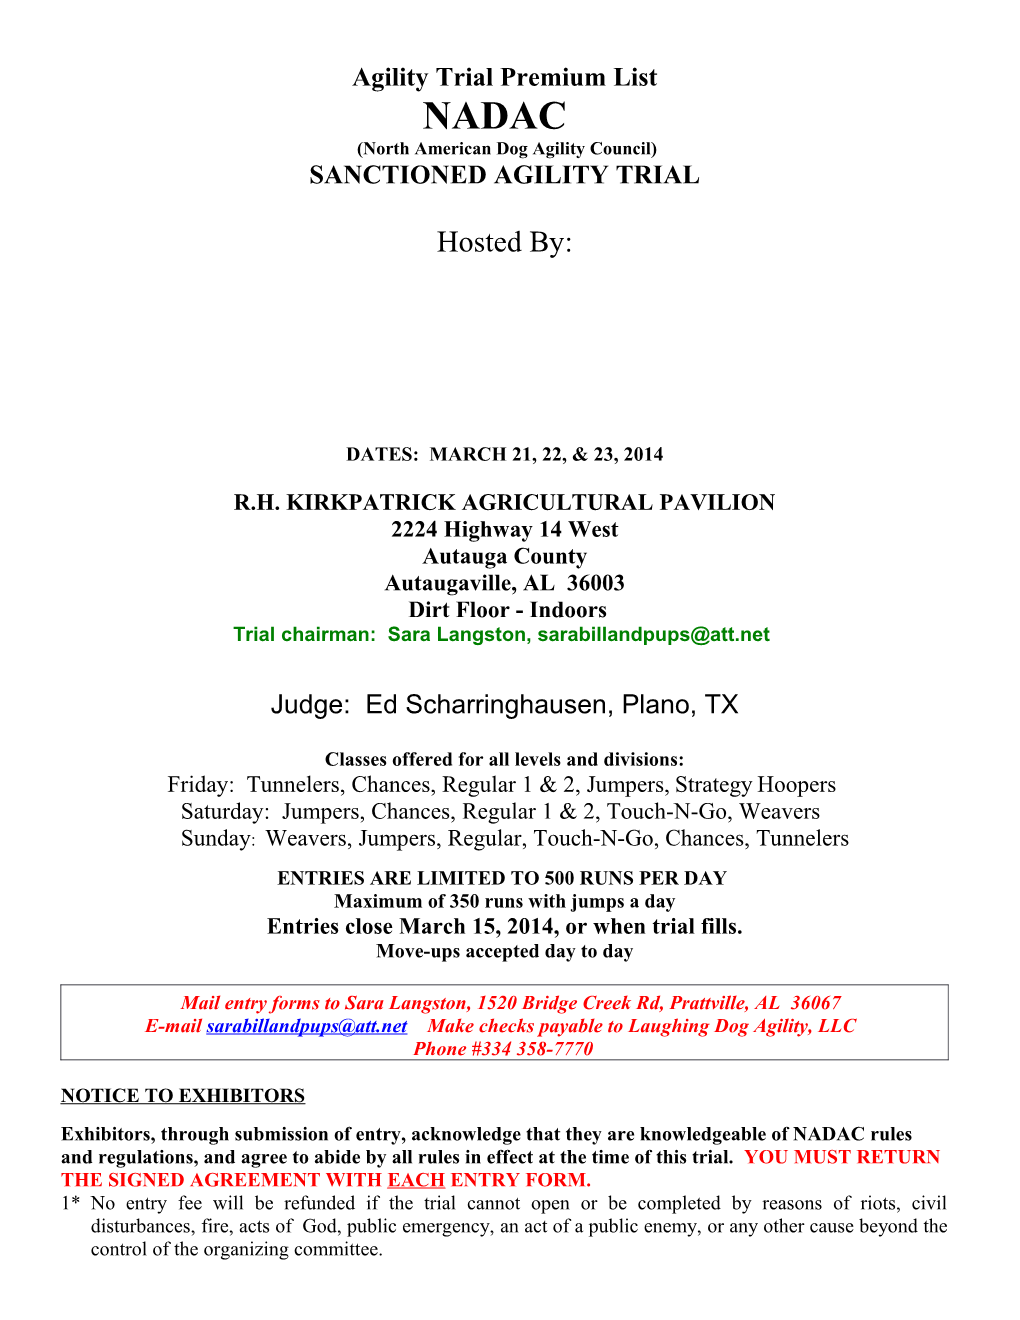 Agility Trial Premium List s3